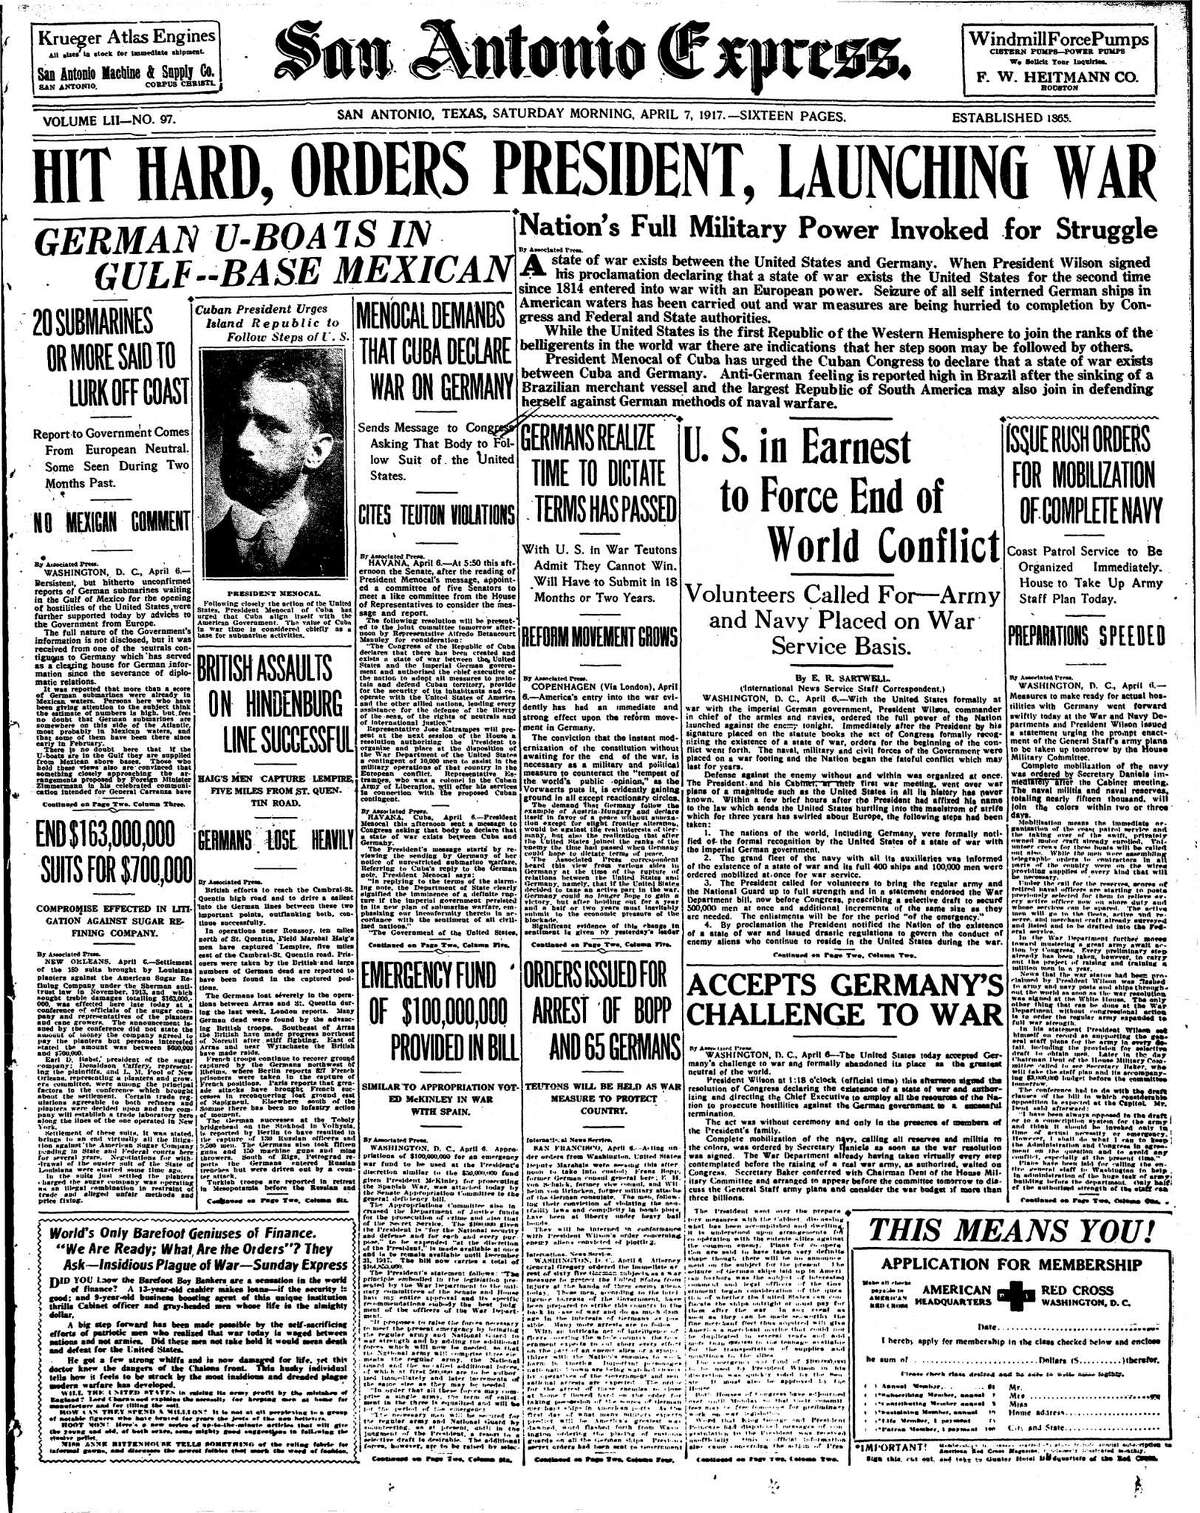 A1 of San Antonio Express, April 7, 1917. "Hit hard, orders President, launching war"